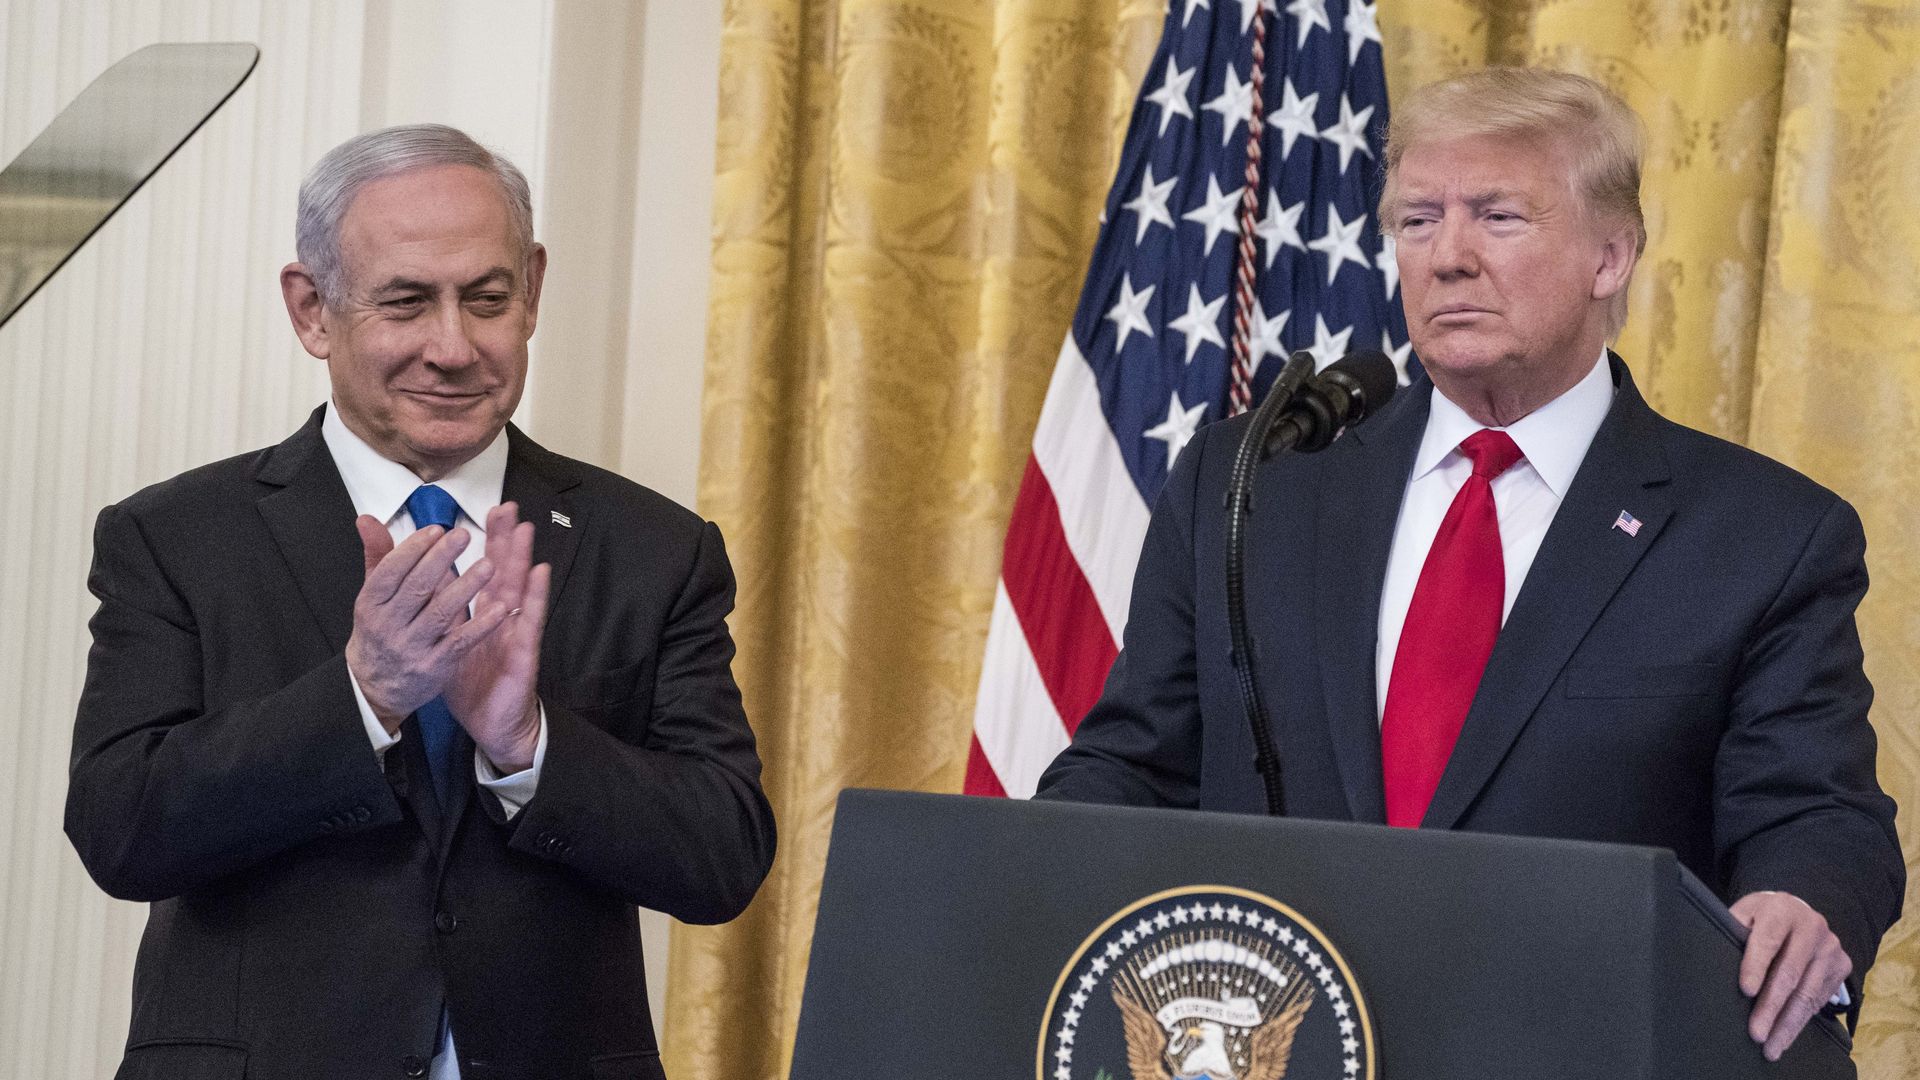 Israeli Prime Minister Benjamin Netanyahu claps as President Trump announces his Middle East peace plan